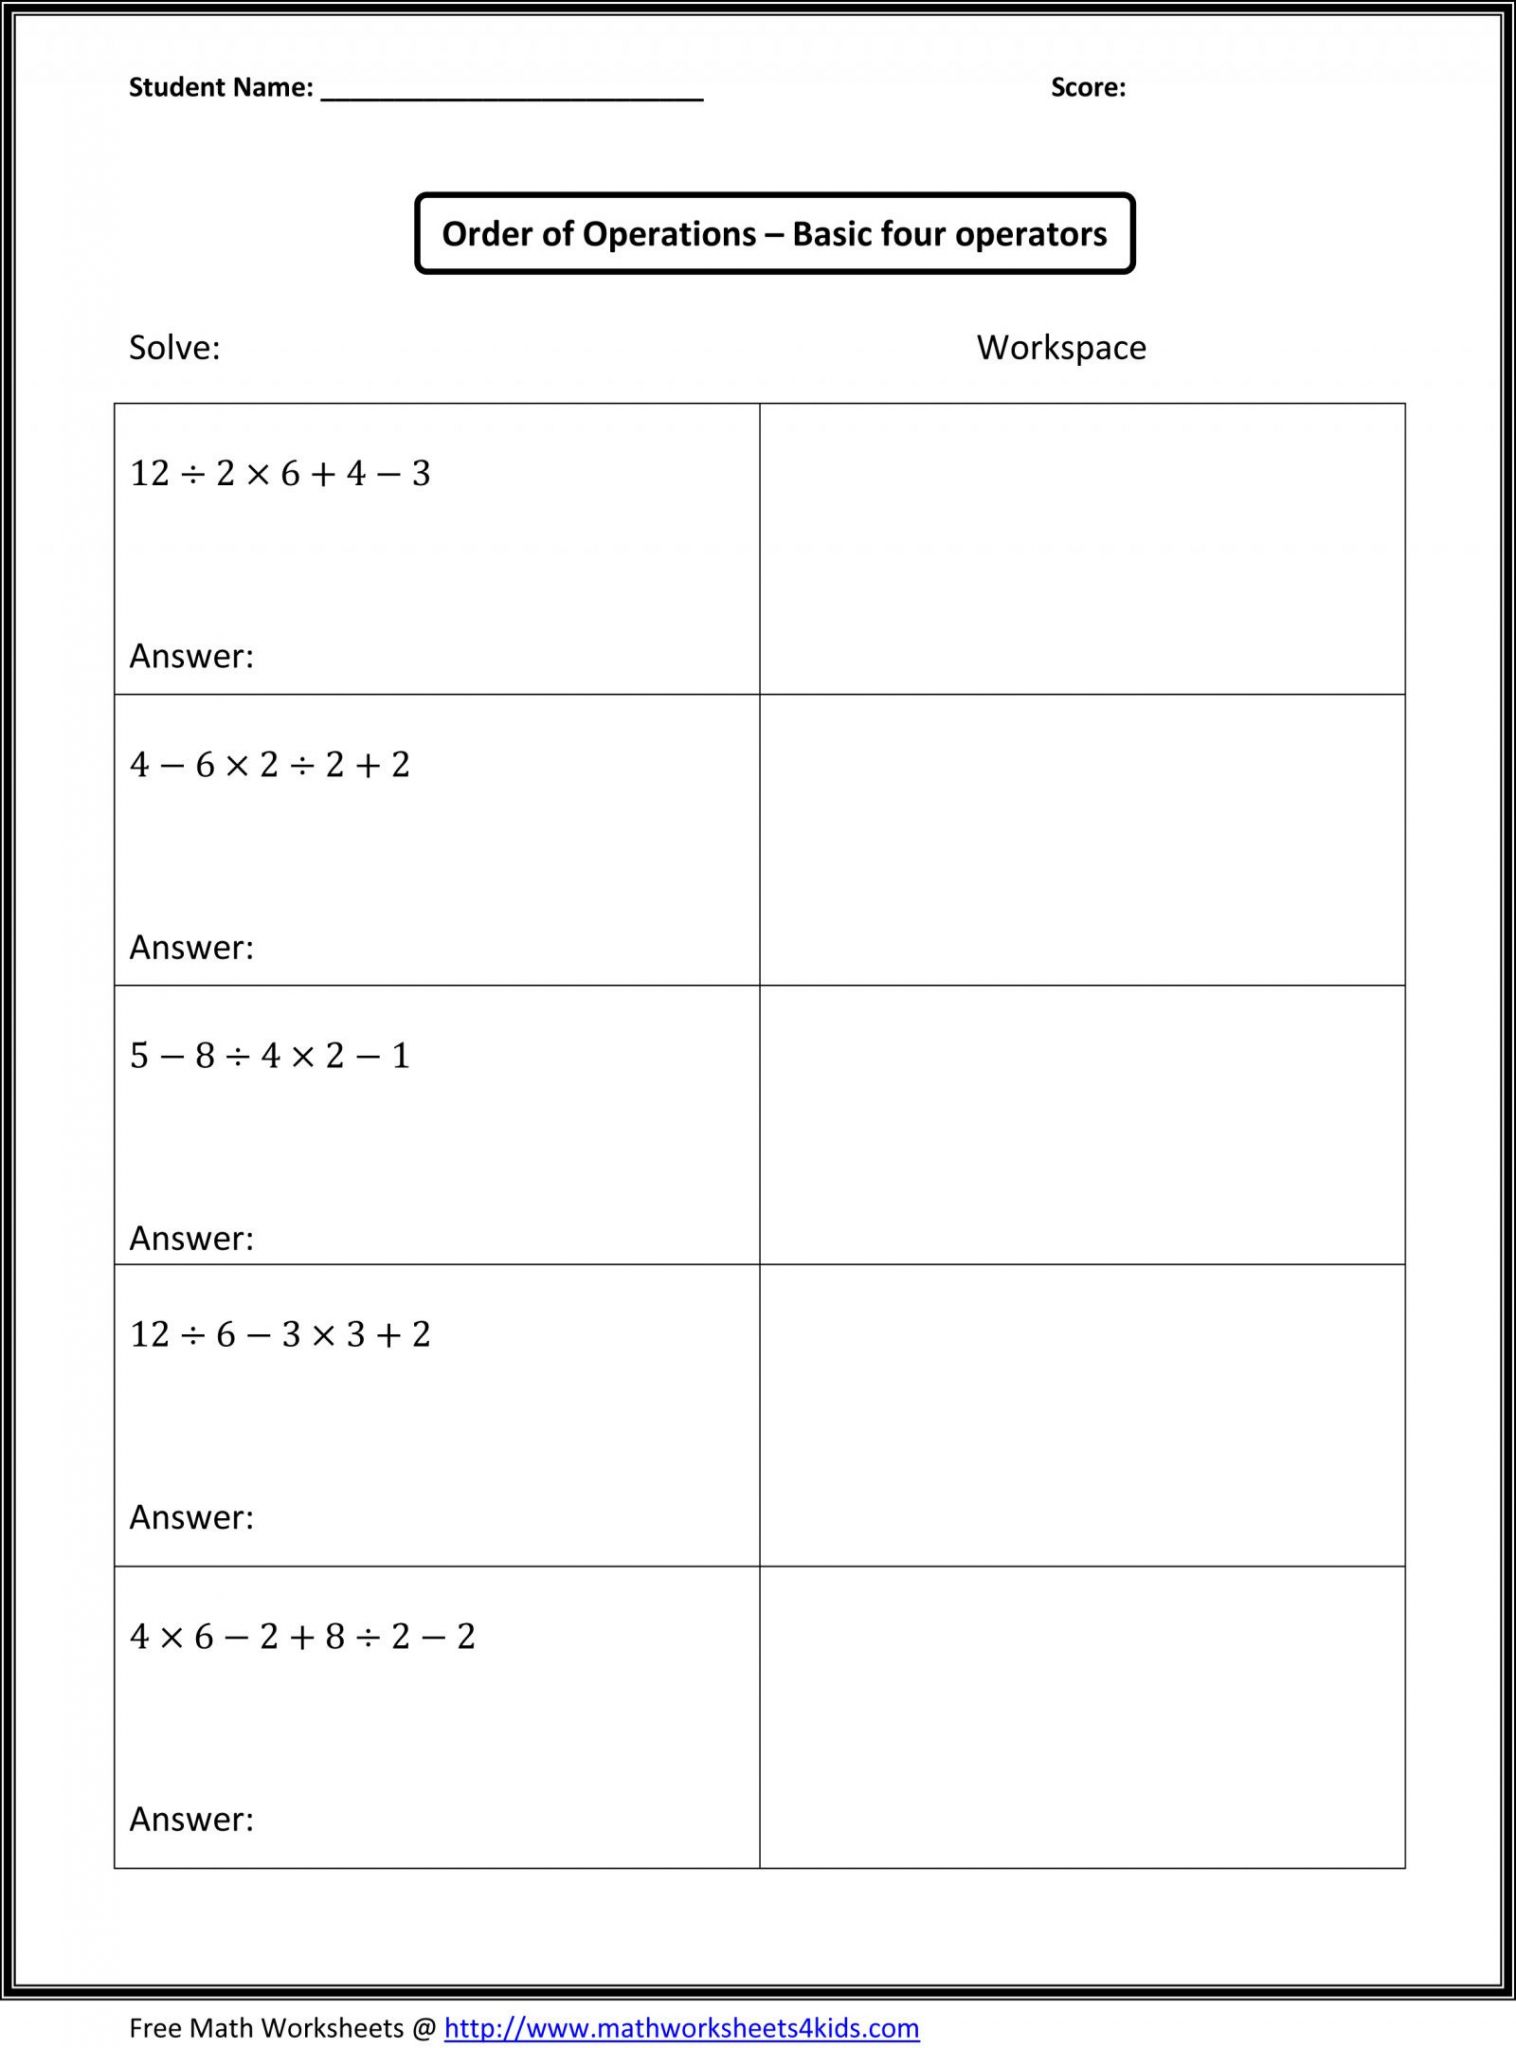 4-free-math-worksheets-third-grade-3-multiplication-multiplication-table-4-6-amp